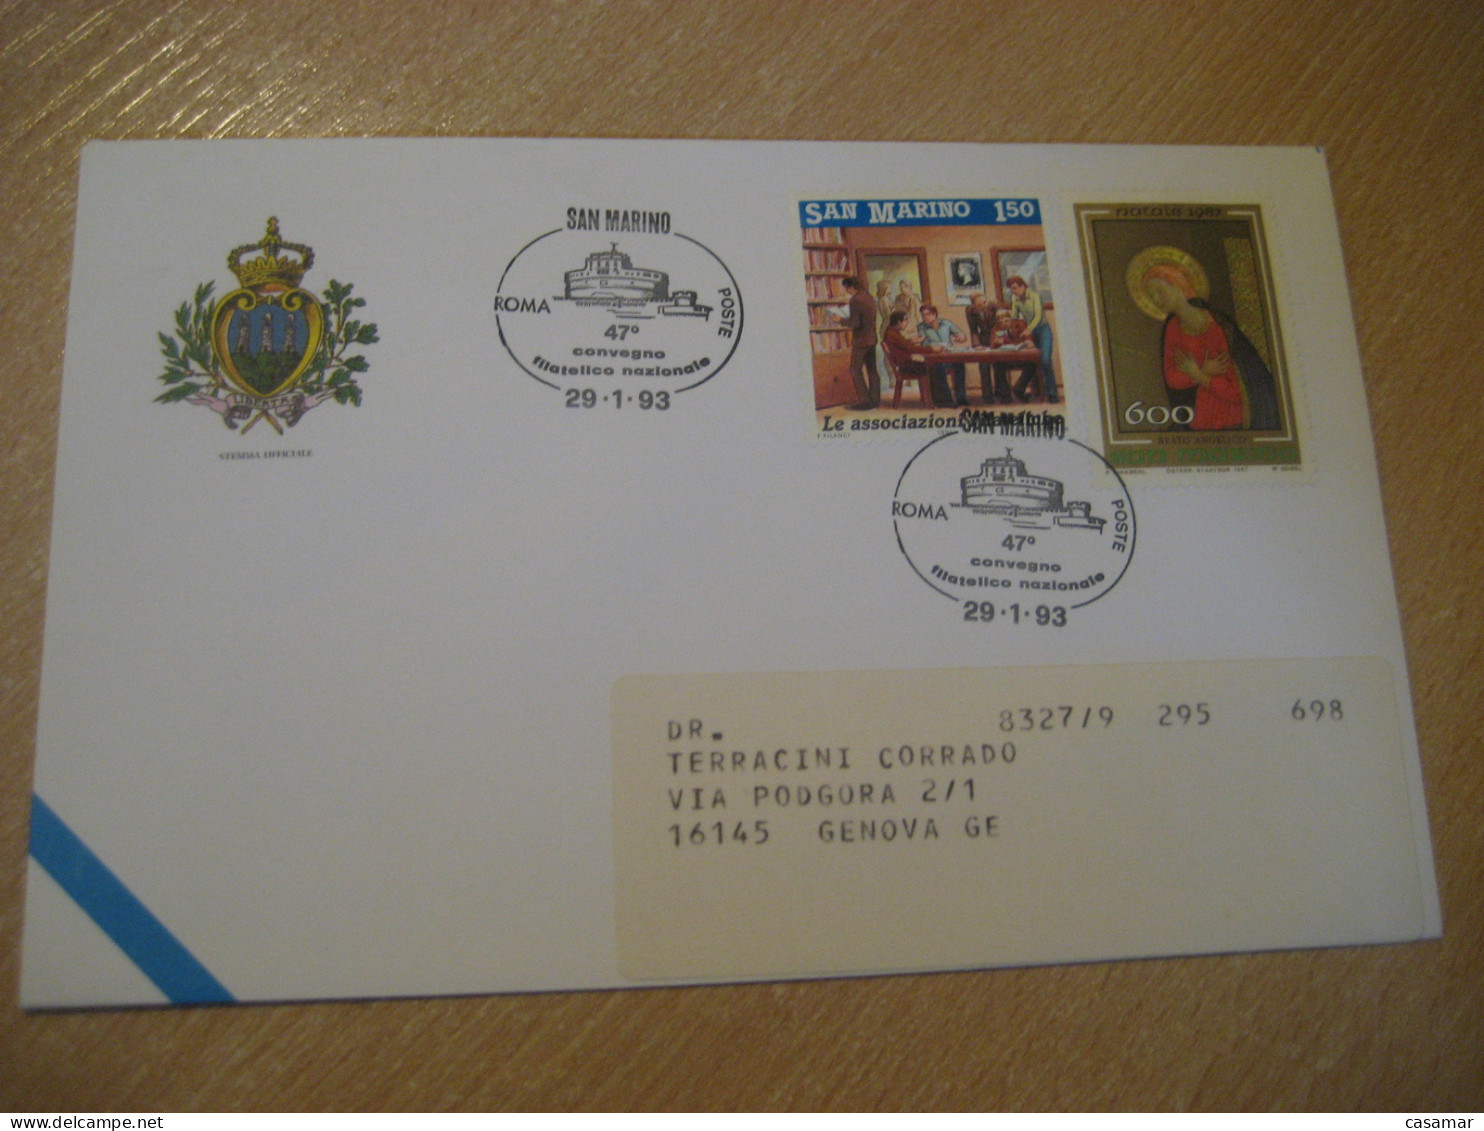 Roma 1993 Convegno Filatelico Numismatico Cancel Cover One Penny Black Christmas Stamps SAN MARINO Italy Italia - Covers & Documents